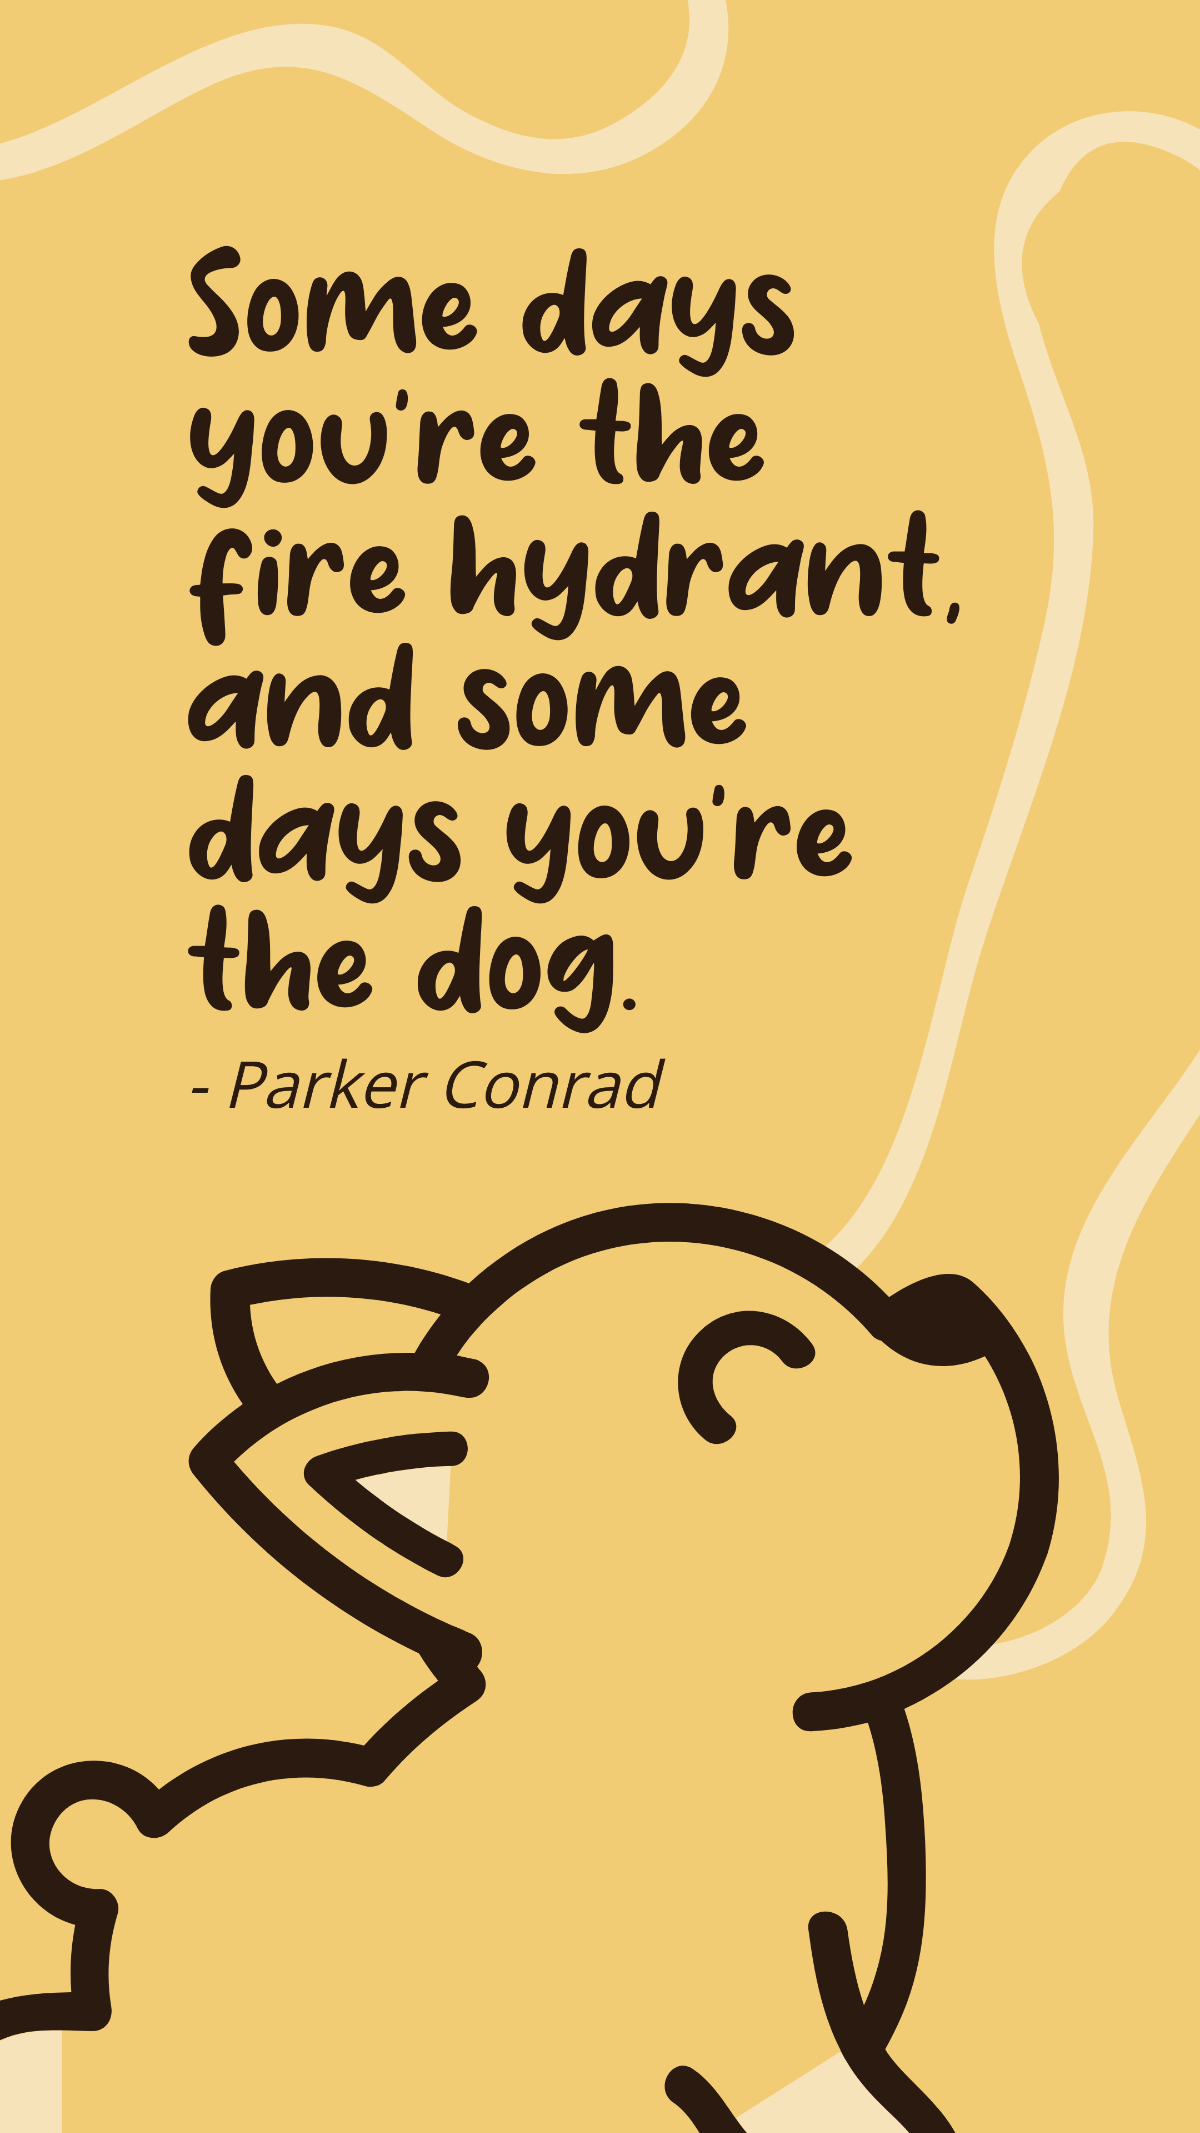 Parker Conrad - Some days you're the fire hydrant, and some days you're the dog. Template